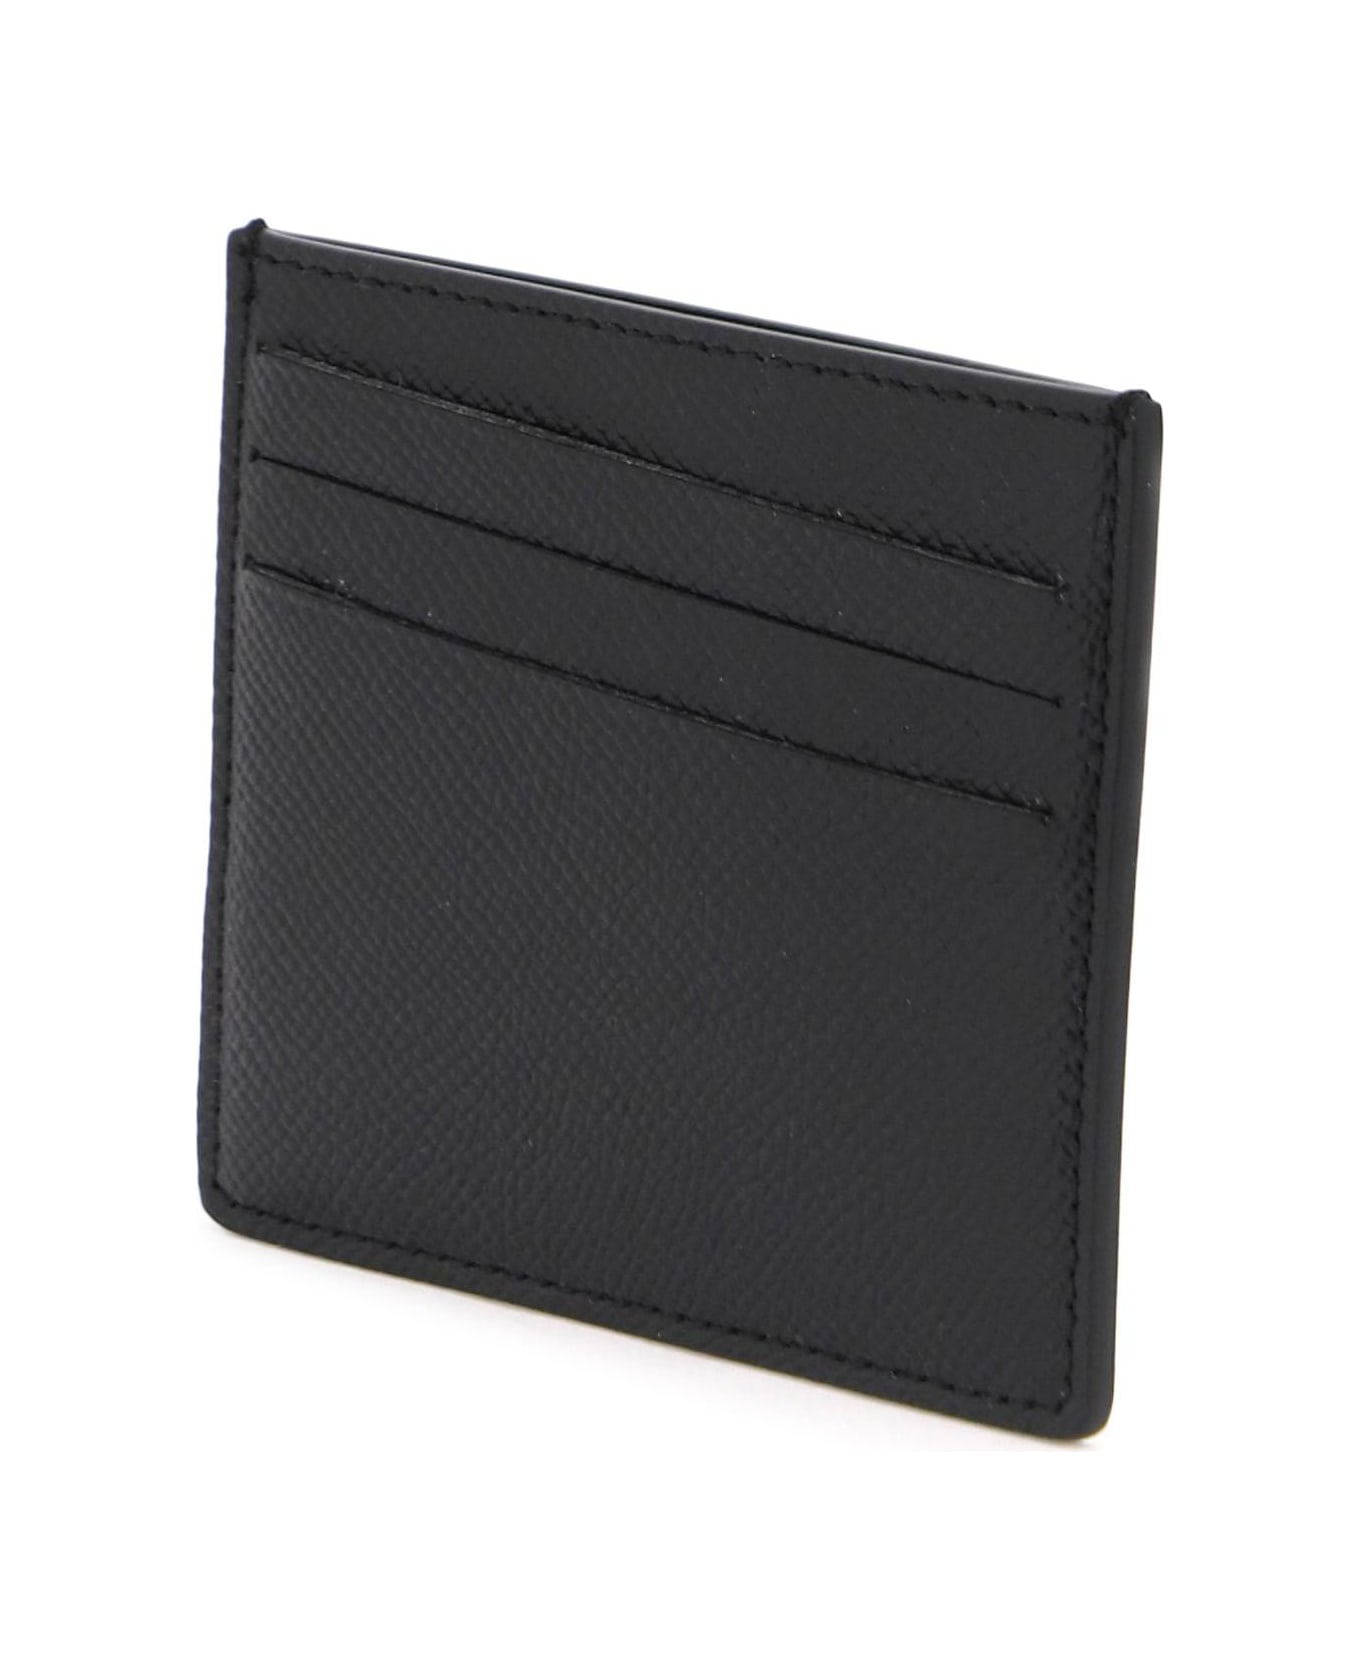 Maison Margiela Black Card Holder - Black 財布